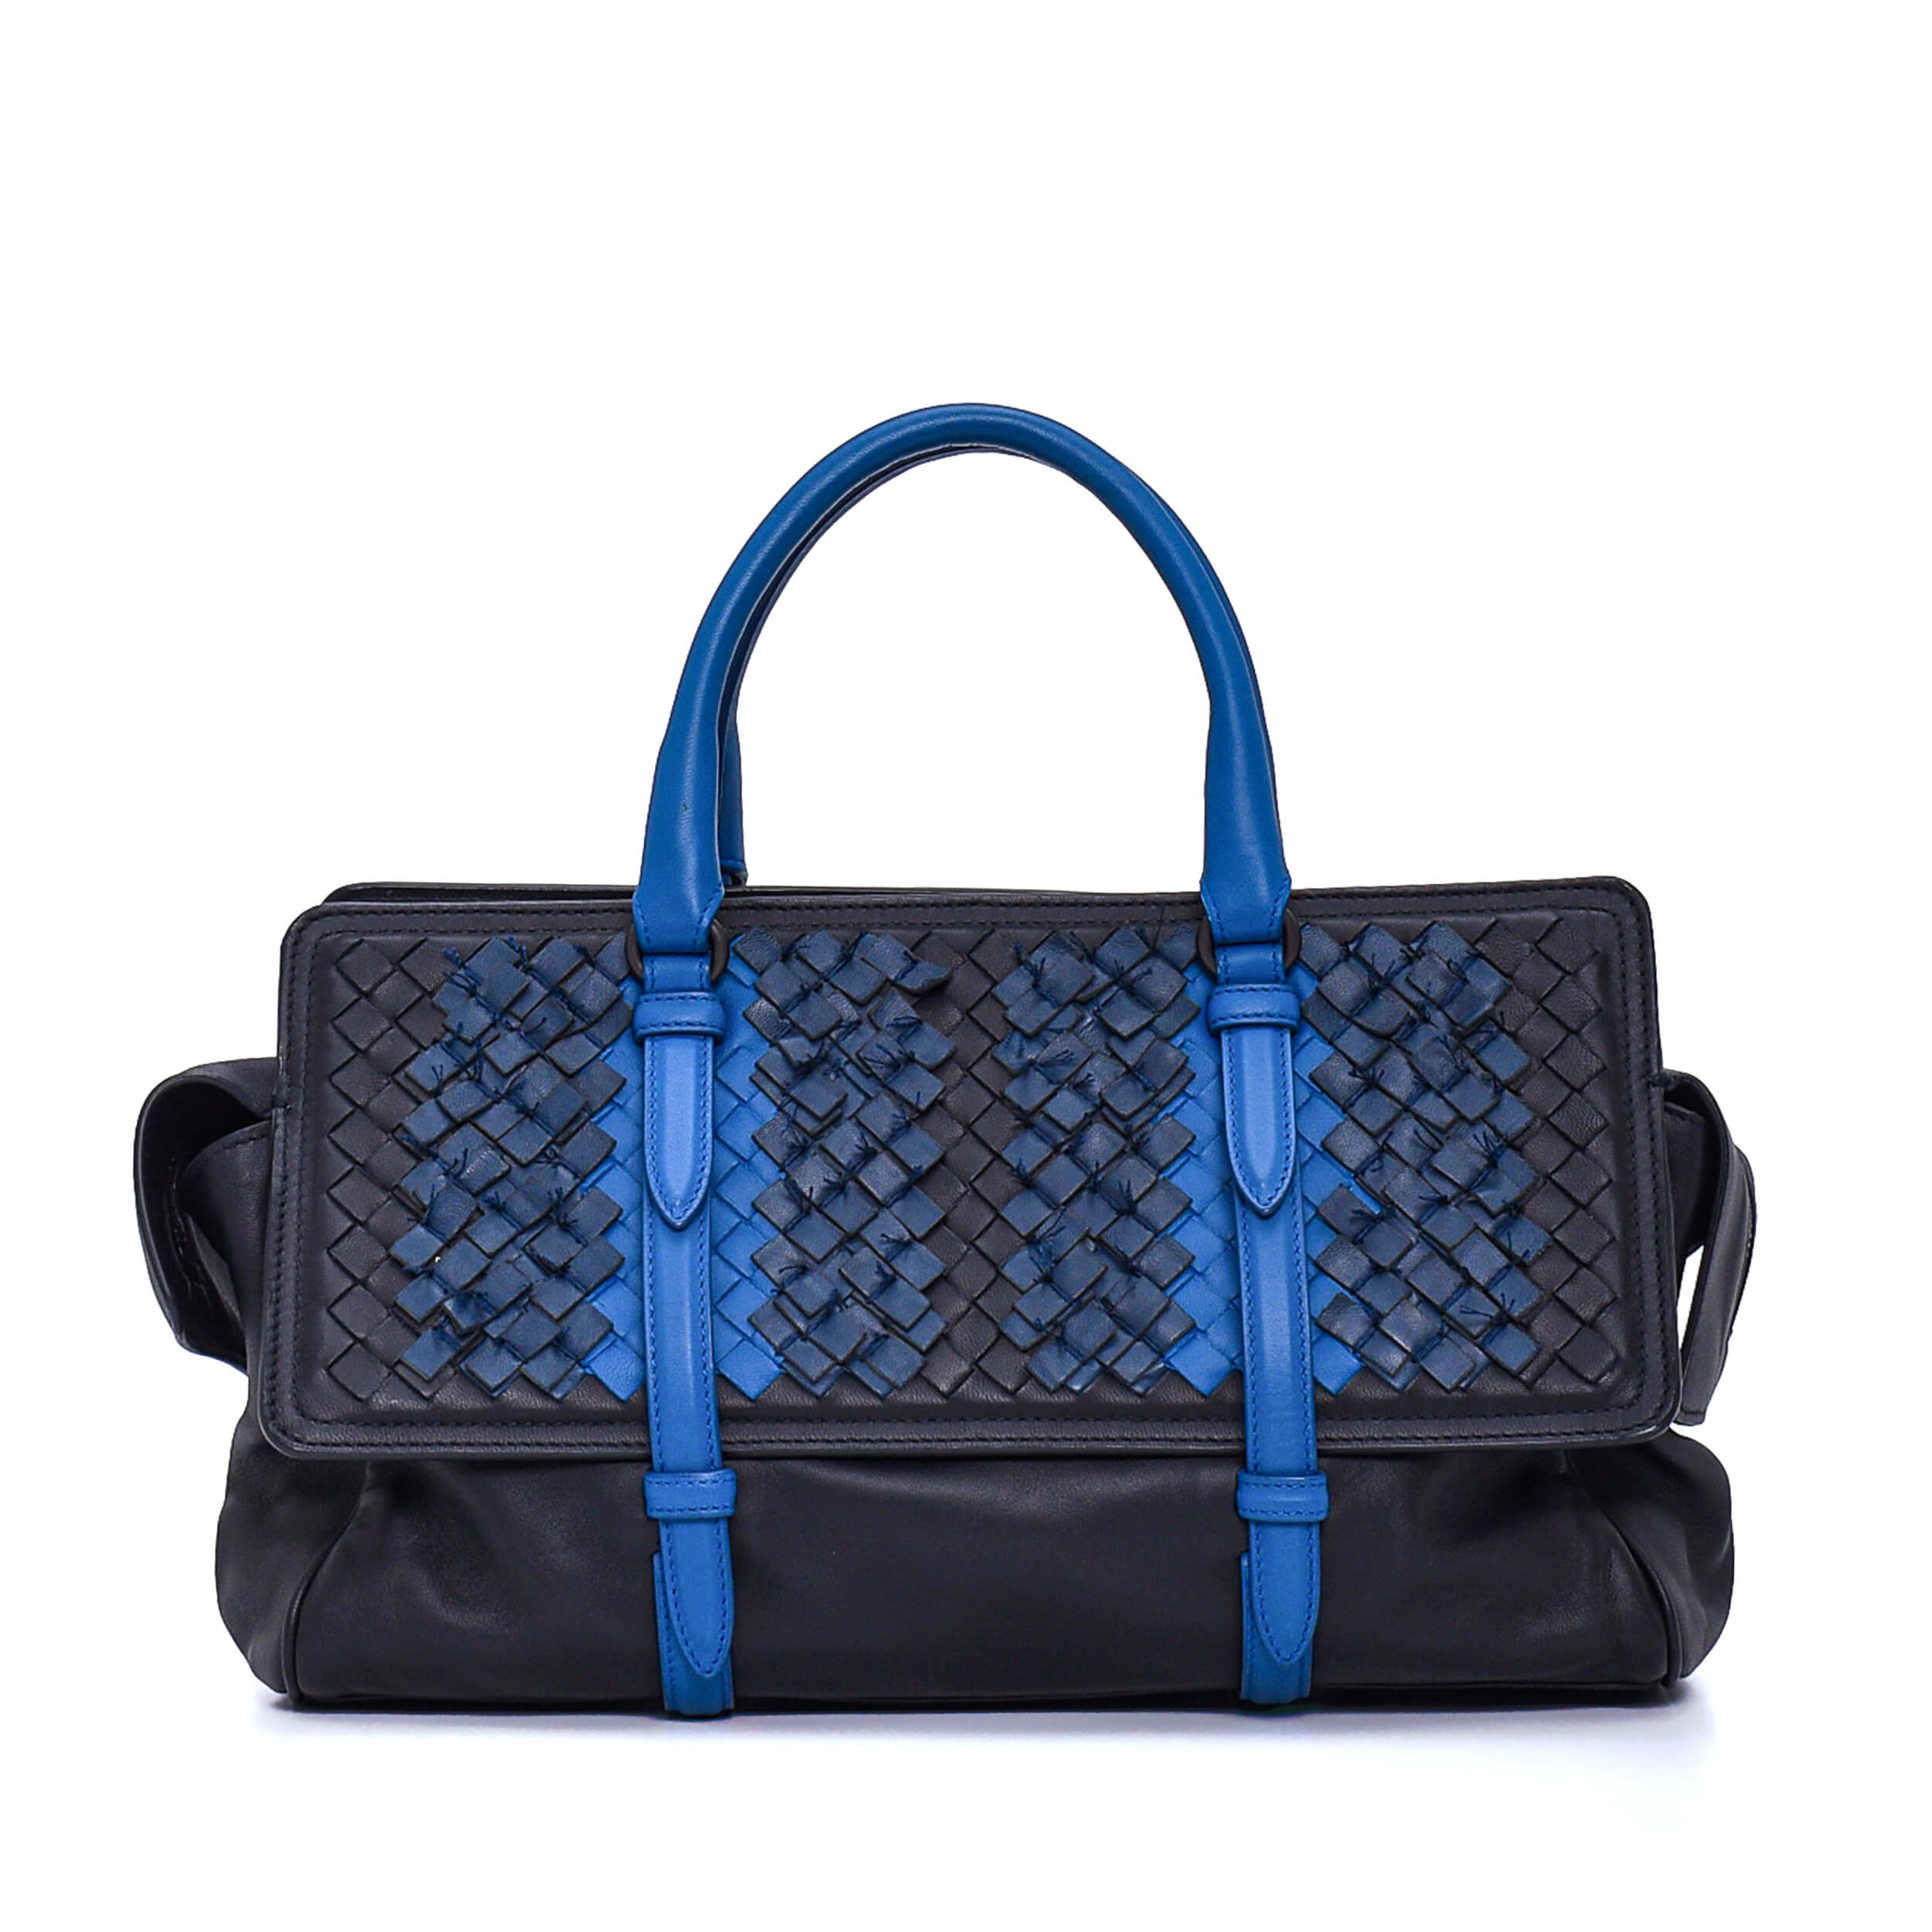 Bottega Veneta - Black & Blue Intercciato Woven Leather Top Handle Bag